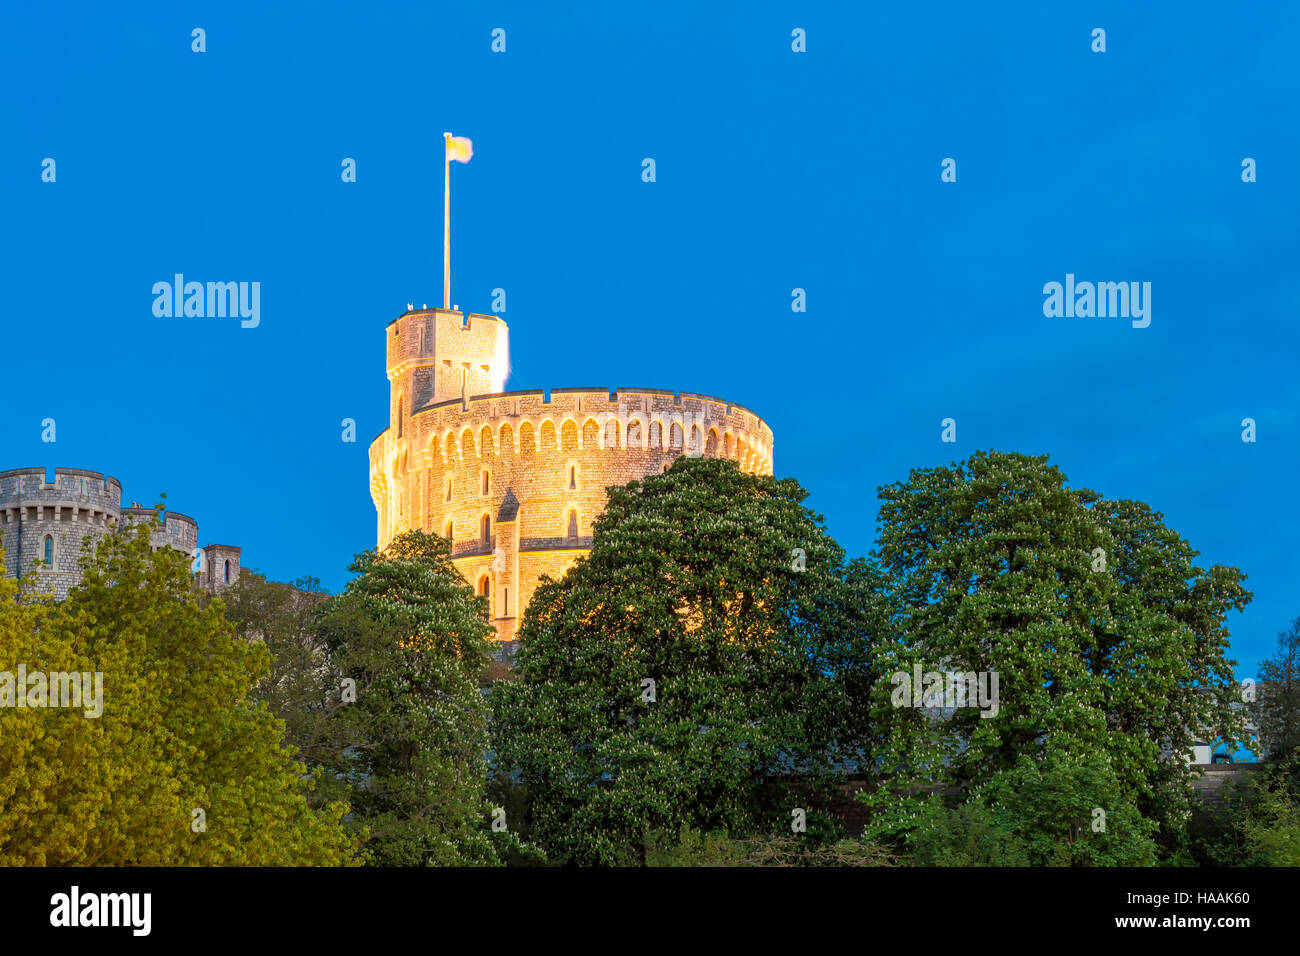 The Round Tower at Windsor Castle. Windsor, Berkshire, England, UK Stock Photo